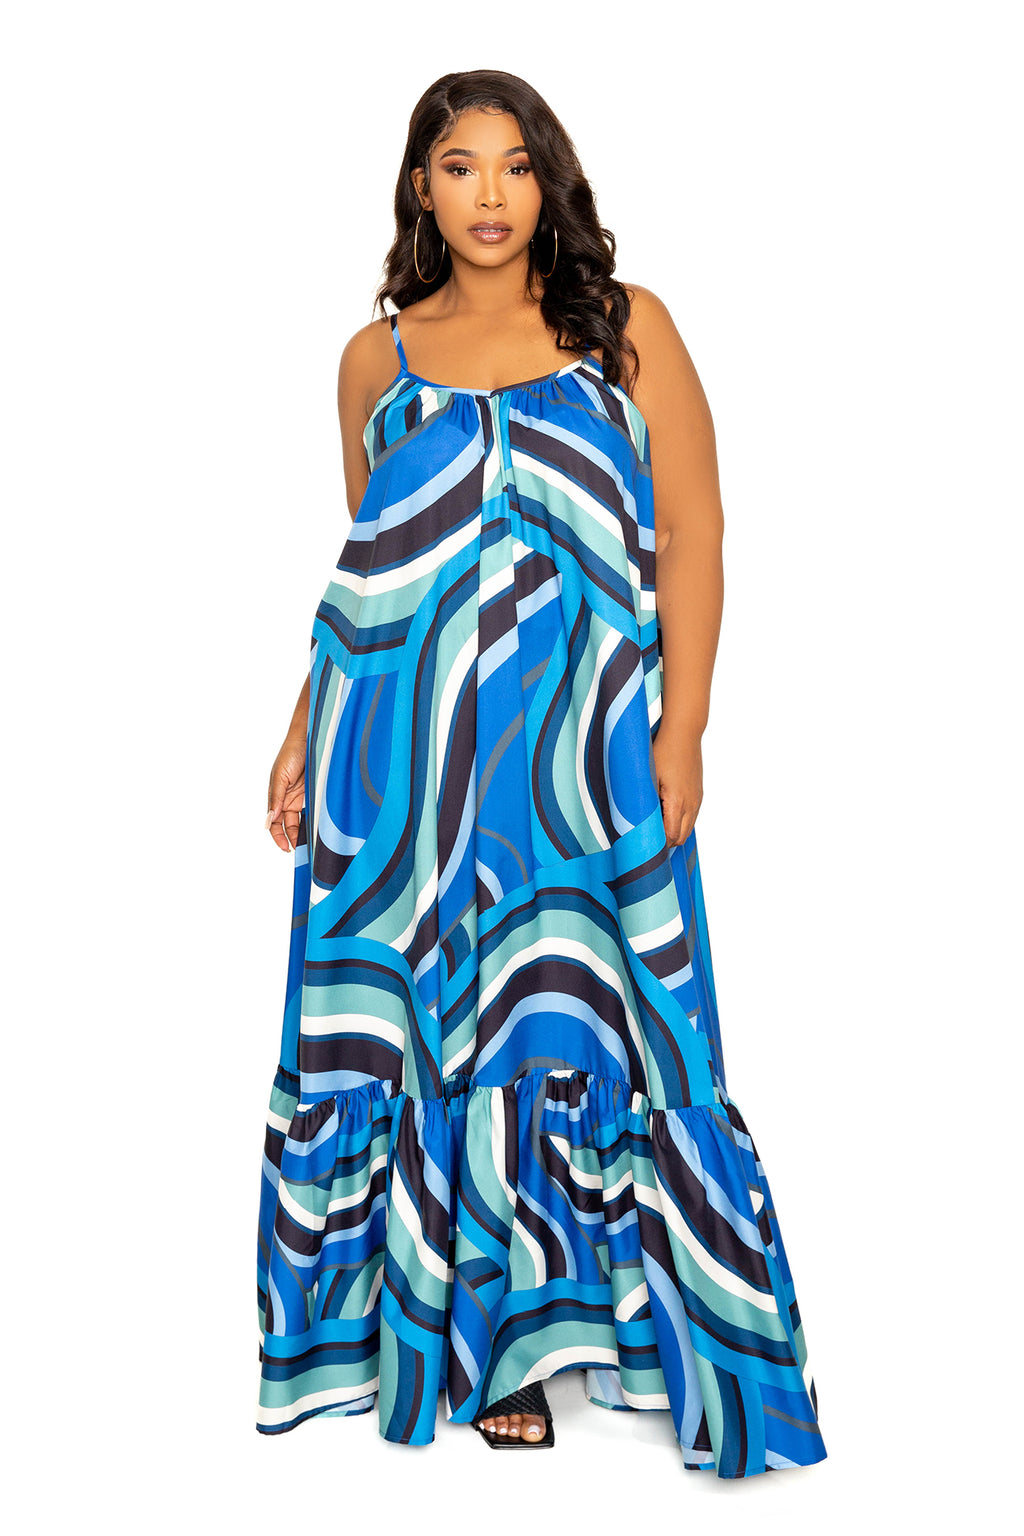 Shein Curve Womens Maxi Geometric Dress Plus Size 4XL Blue & White NWOT